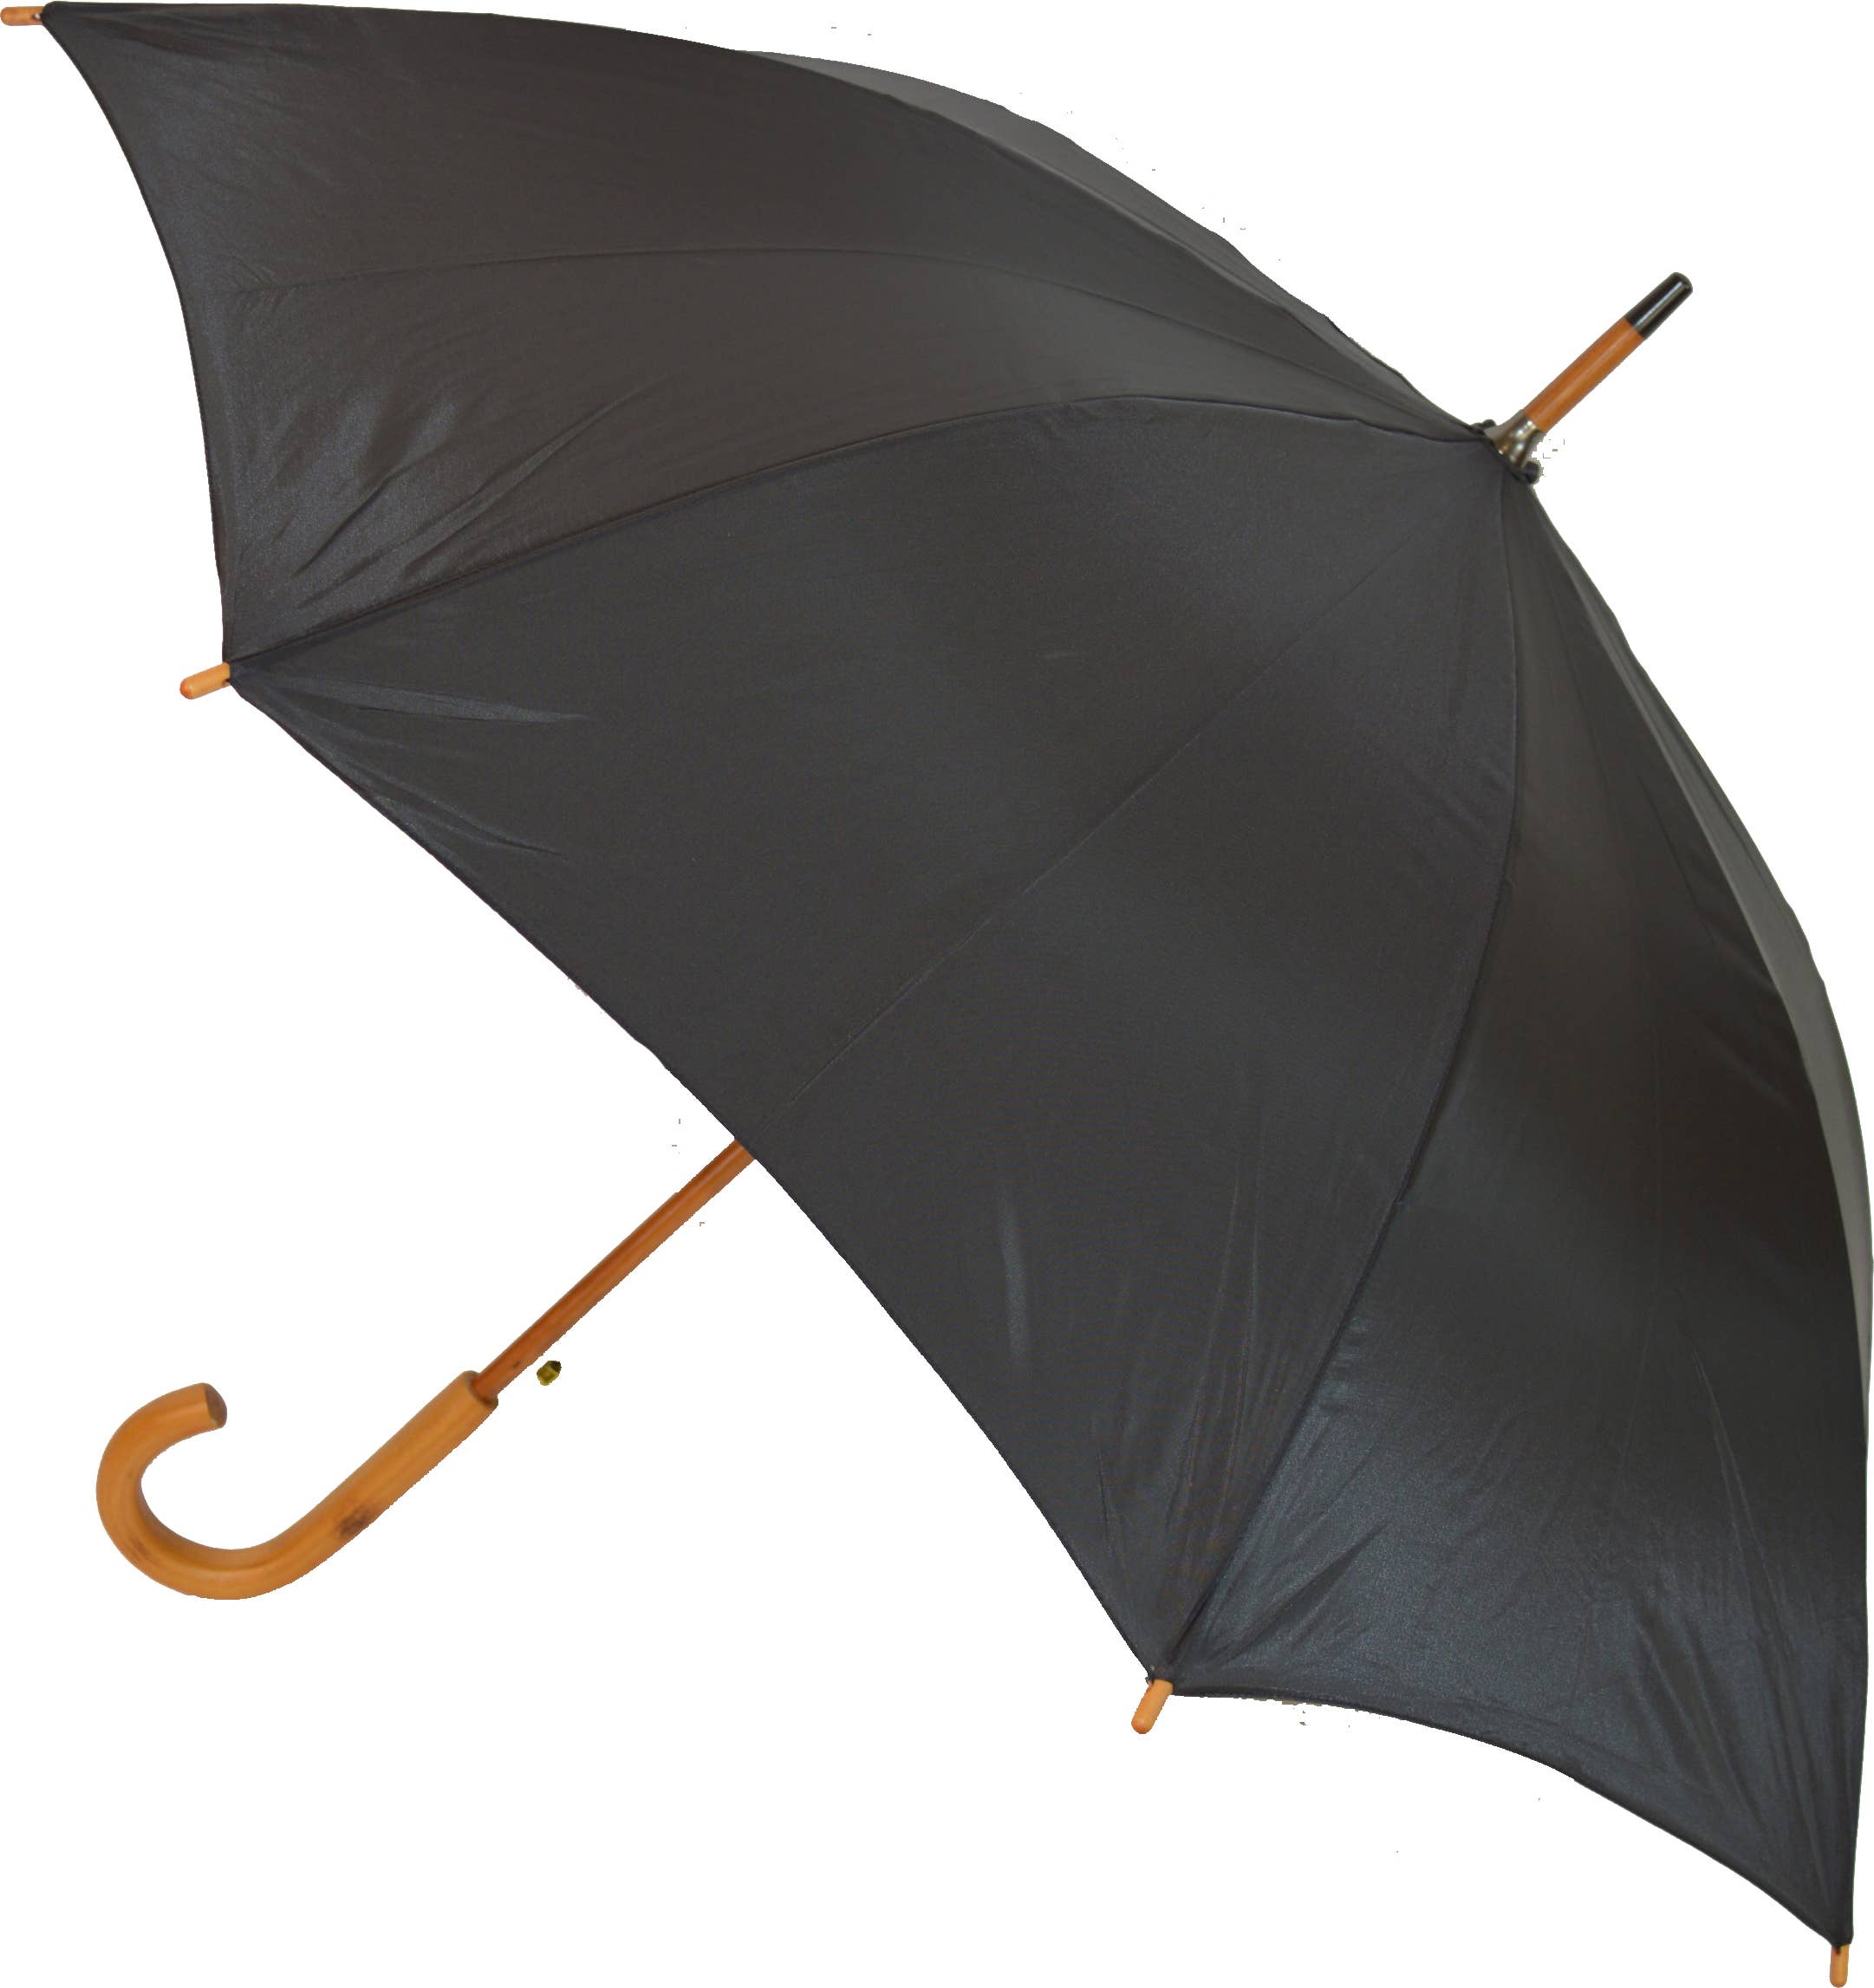 Gents Auto Stick Umbrella with wood hooked handle